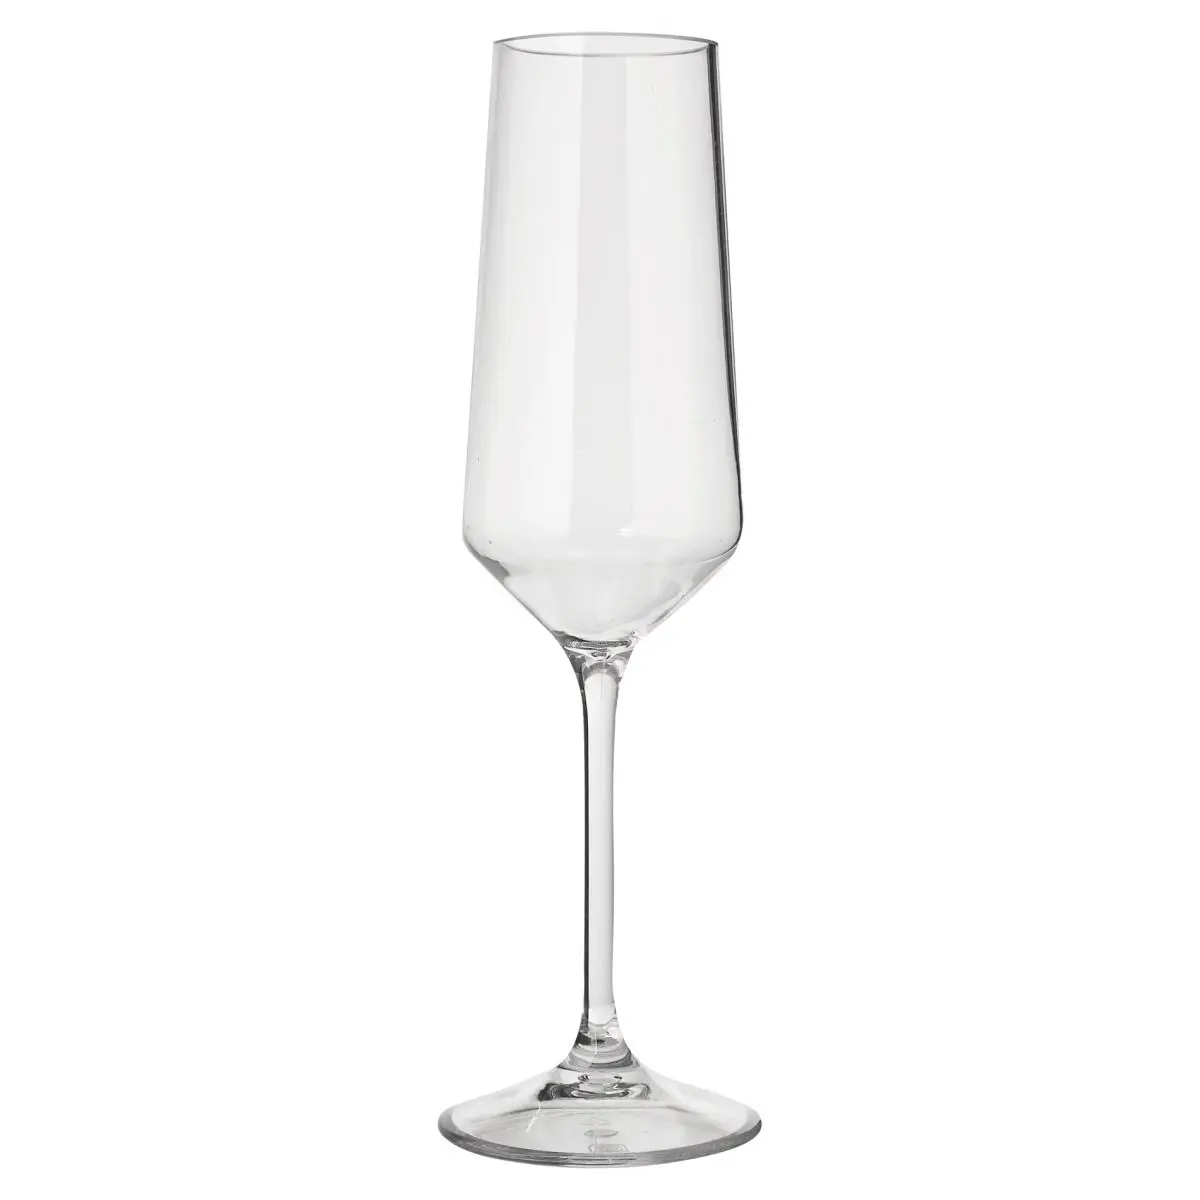 Trinkglser Riserva - pohár na šampanské 250 ml sada 2 kusov